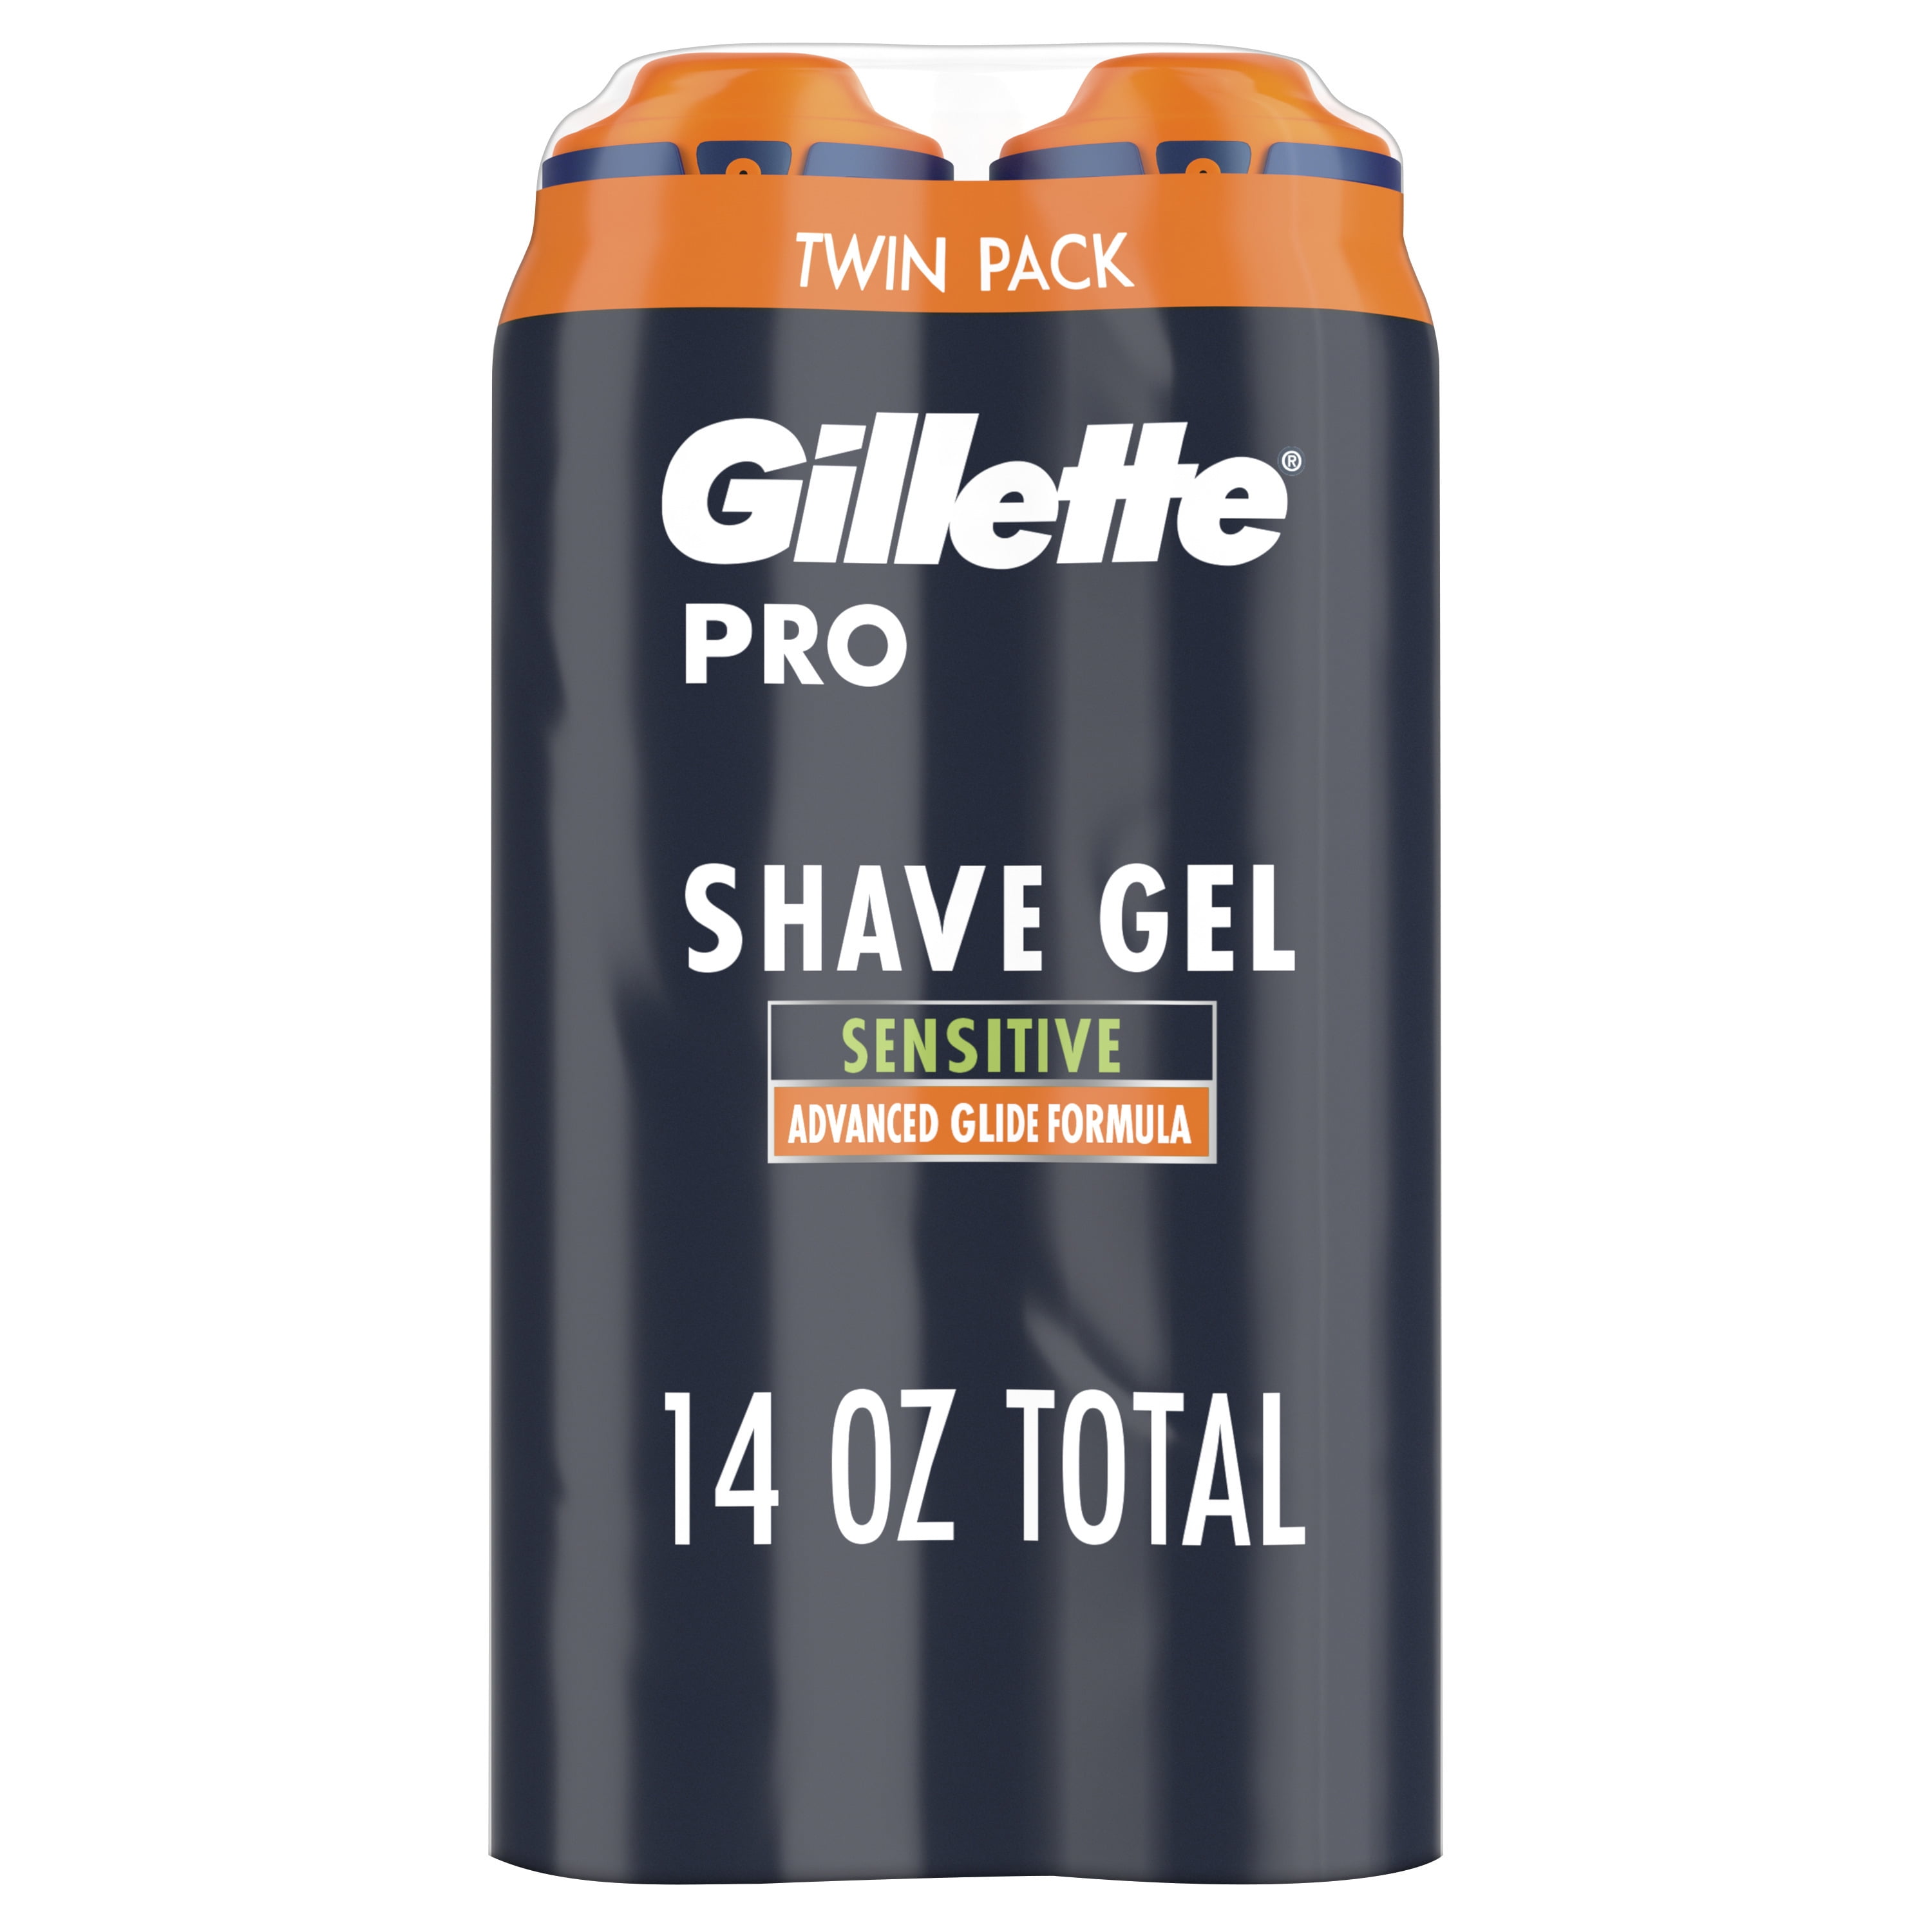 Gillette Pro Shaving Gel Twin Pack